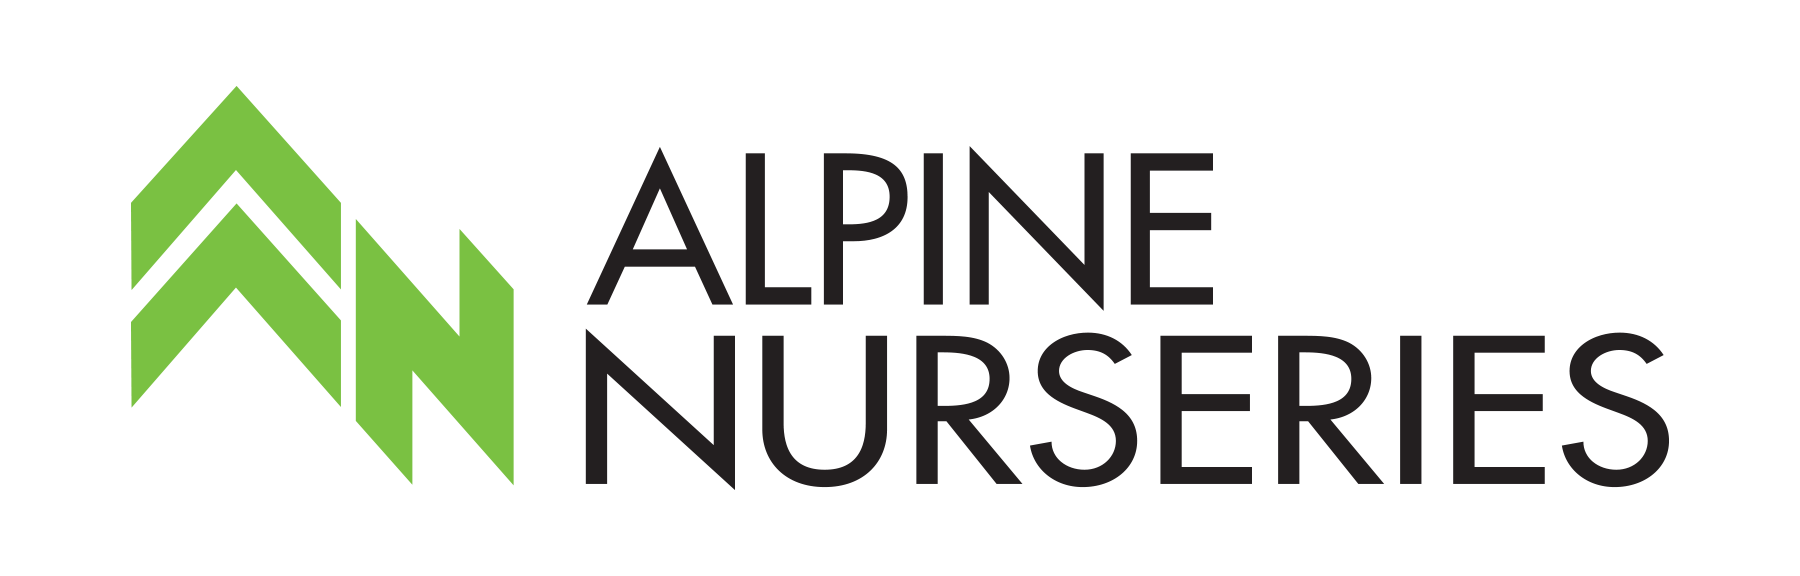 Alpine Nurseries logo